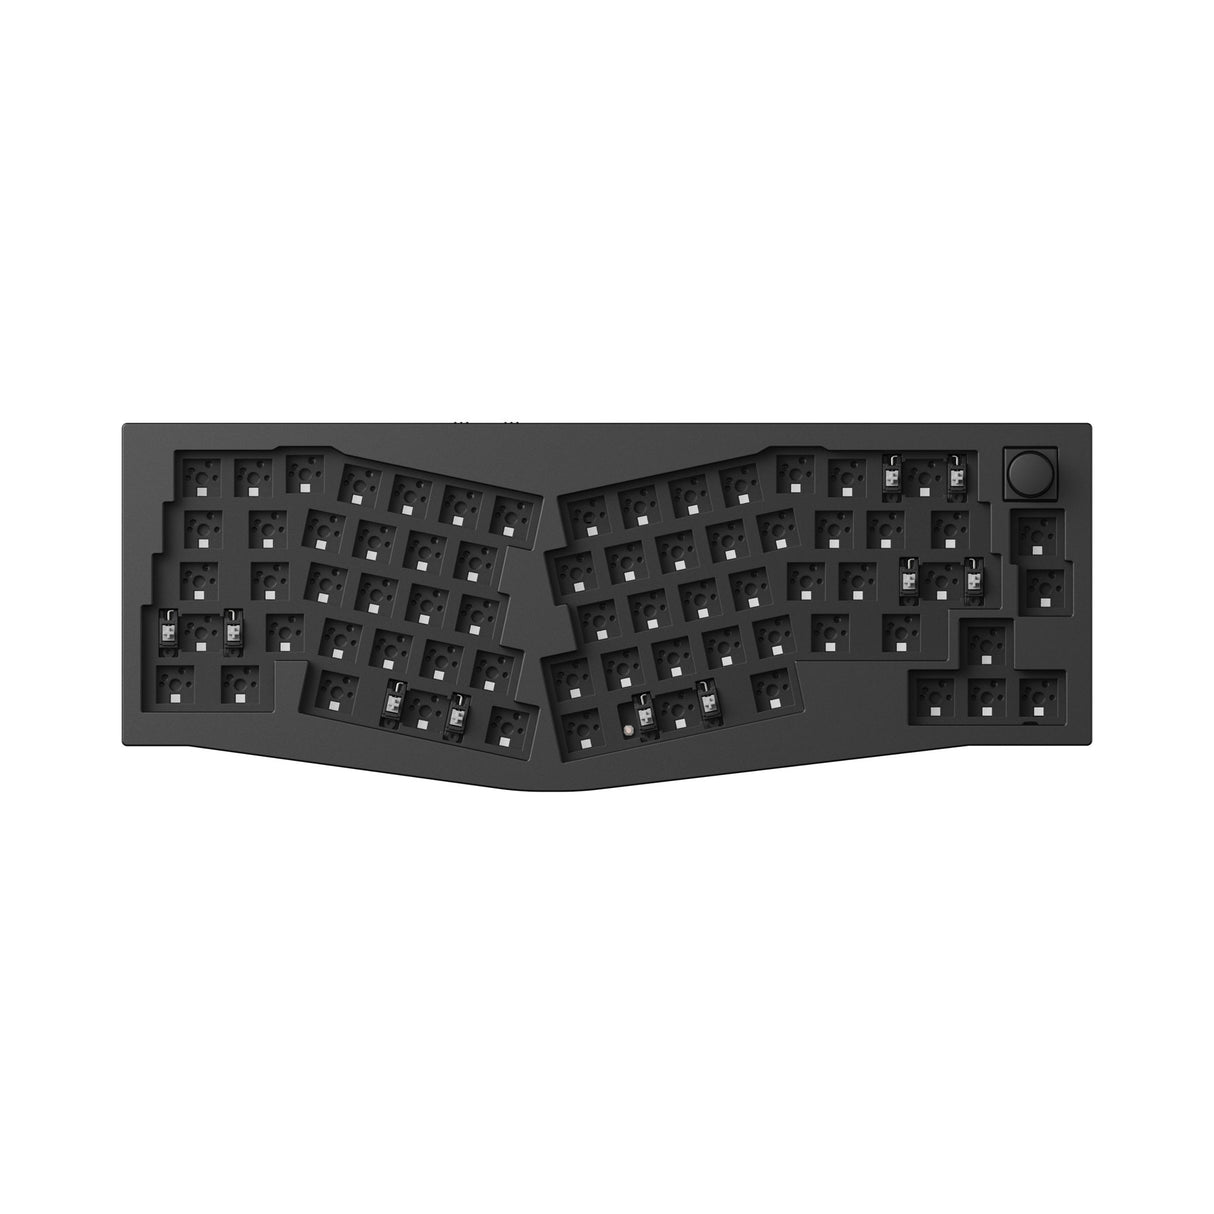 Keychron Q8 Max QMK/VIA Wireless Custom Mechanical Keyboard 65 Percent Alice Layout Aluminum Black for Mac Windows Linux Barebone Knob